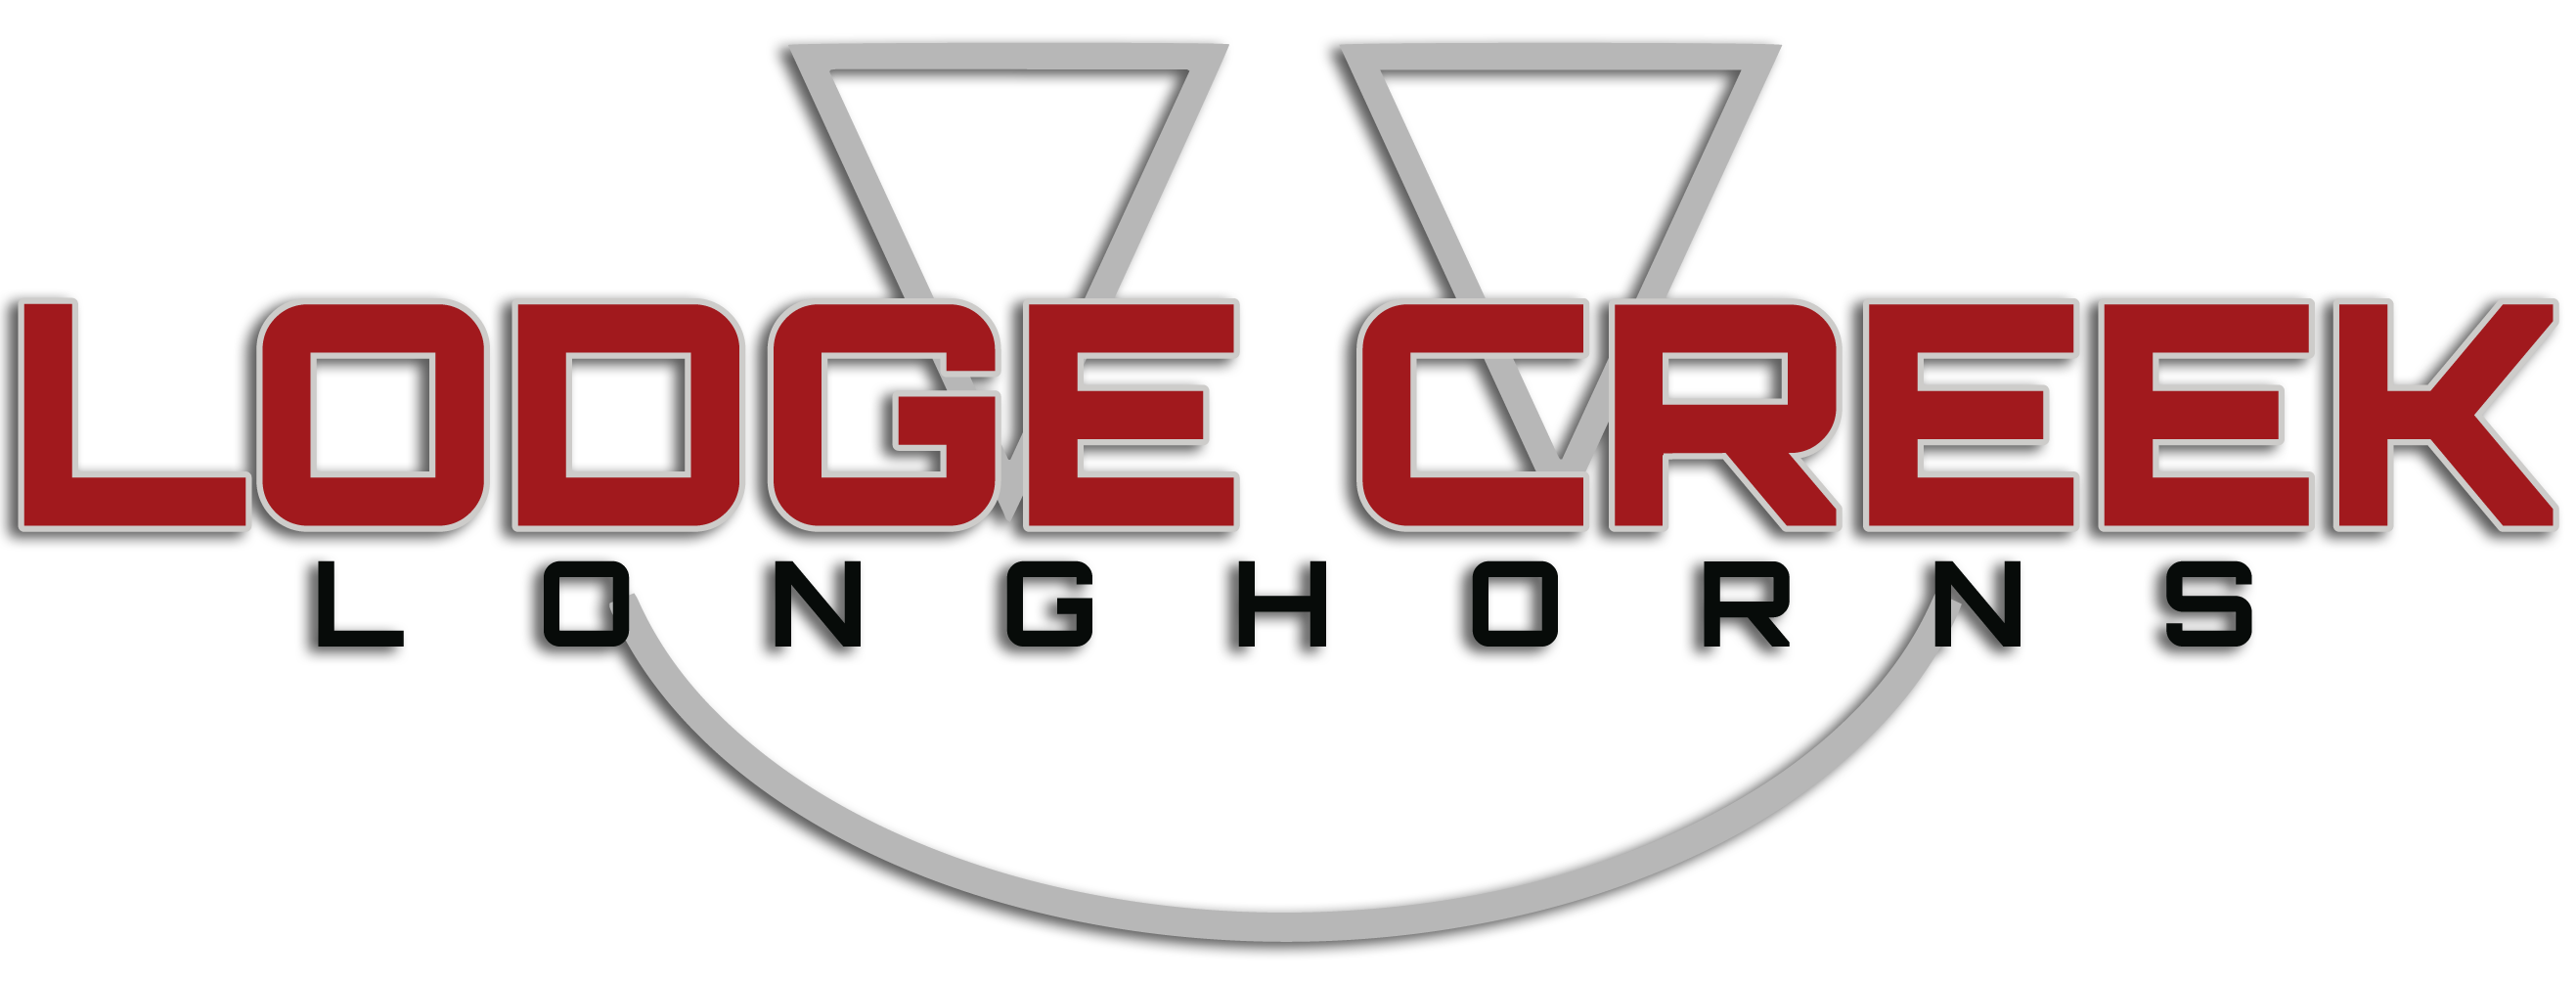 Lodge Creek Longhorns logo